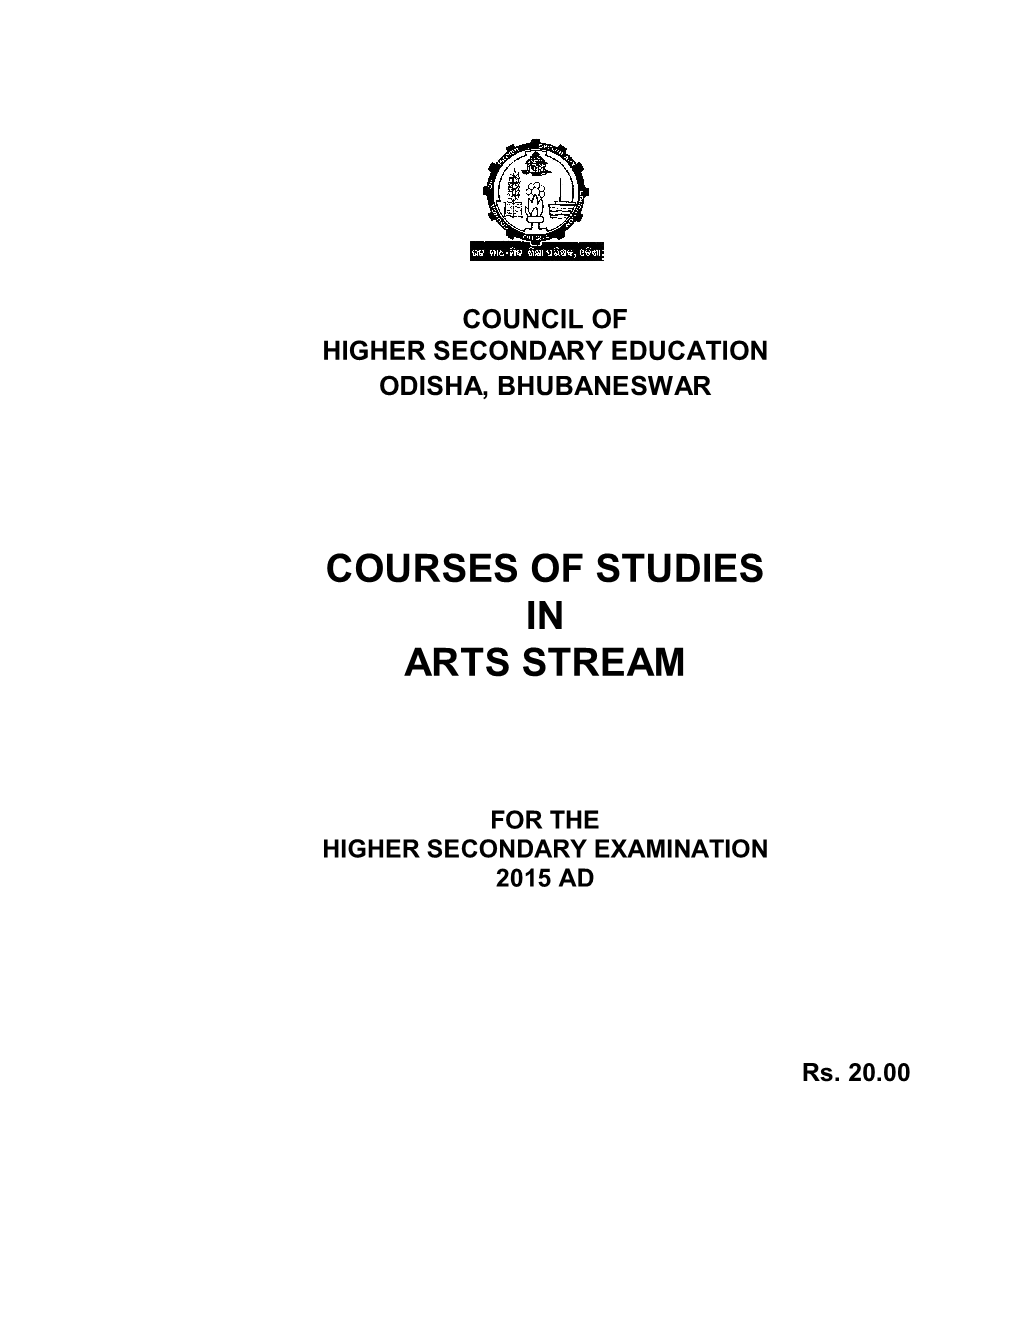 Courses of Studies in Arts Stream